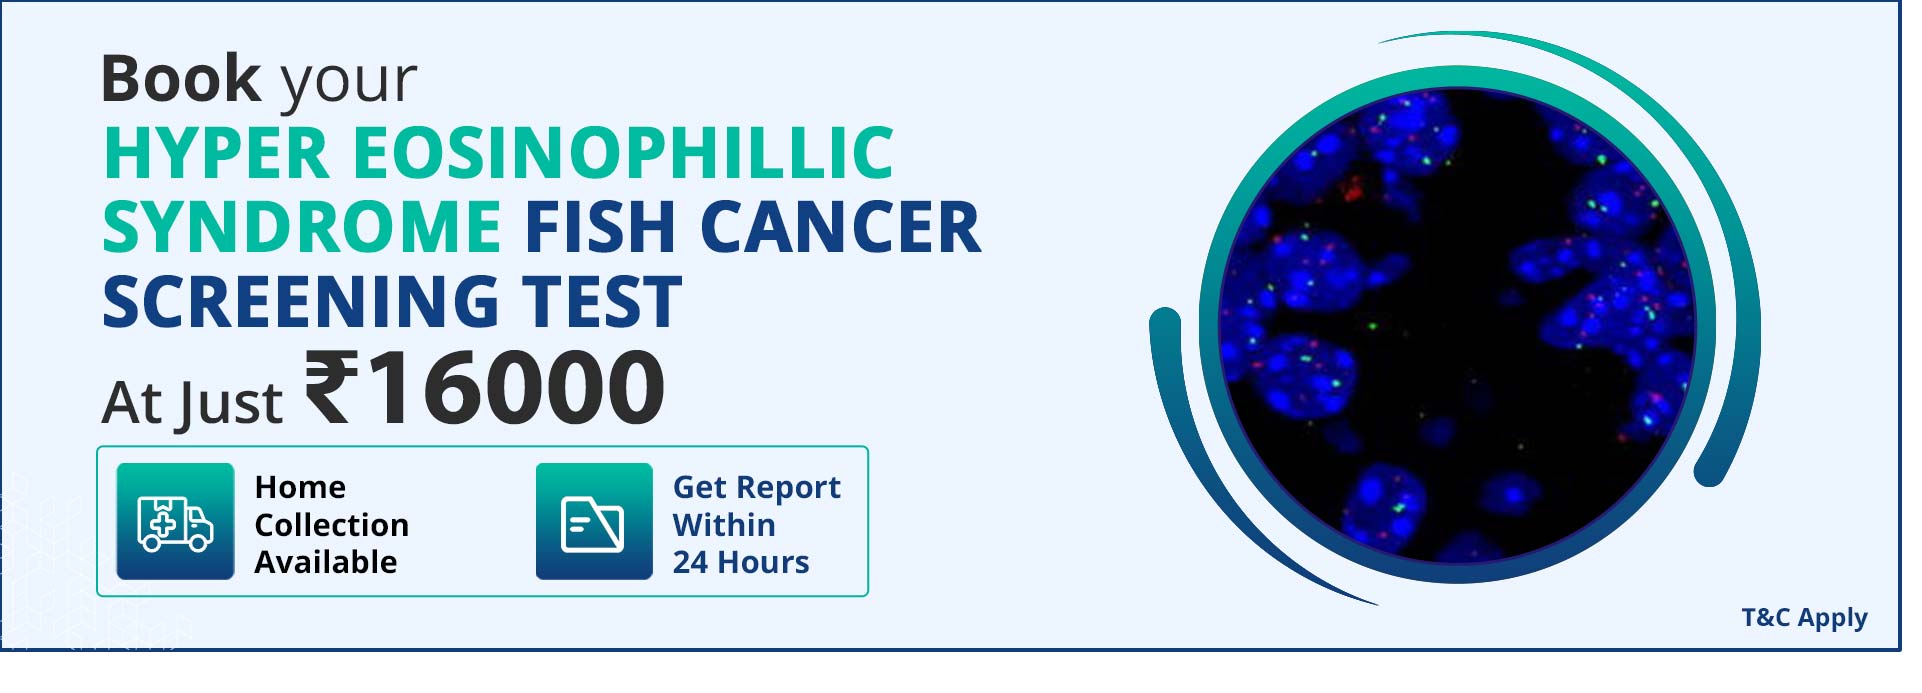 Hyper Eosinophillic Syndrome Fish Cancer Screening Test